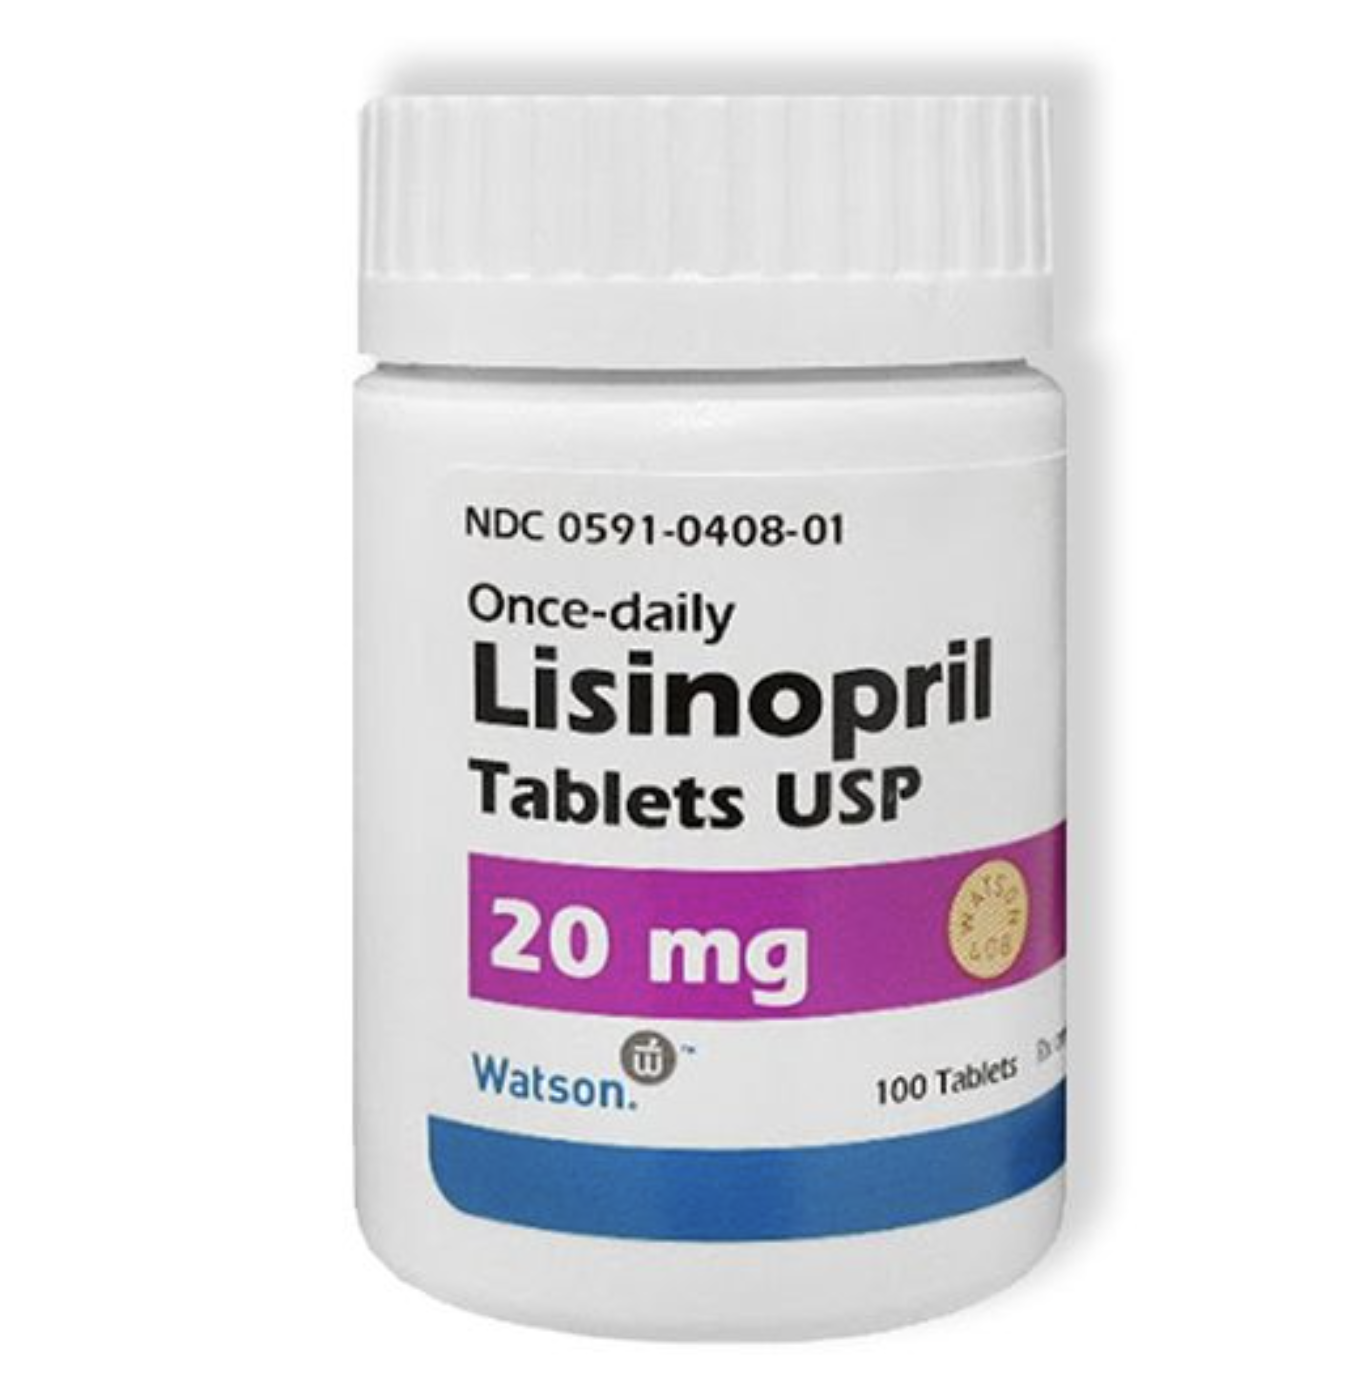 Bottle of Lisinopril tablets